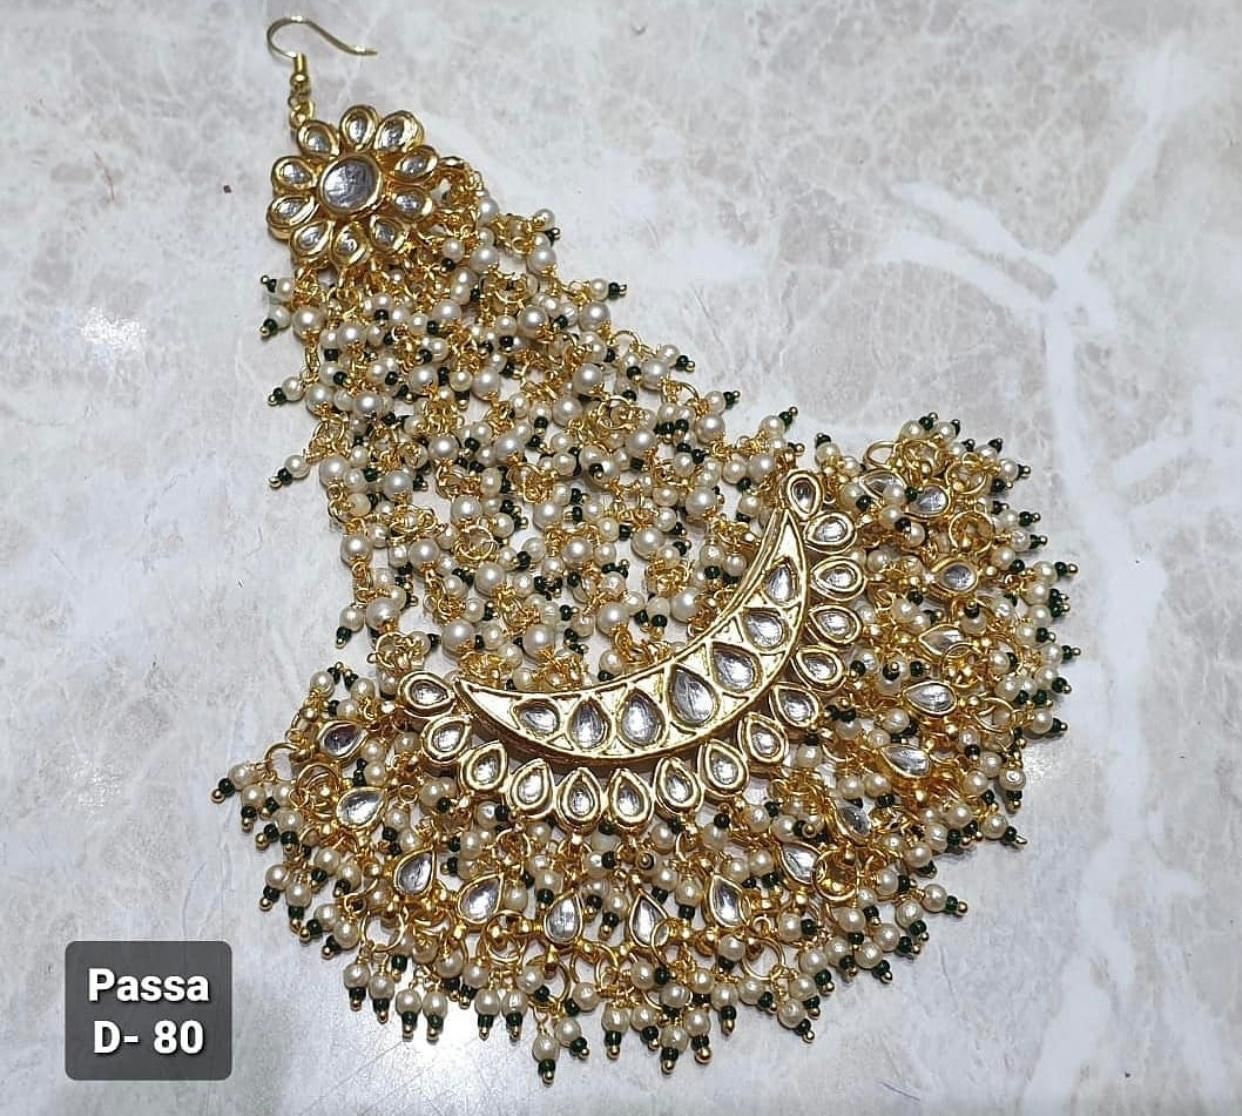 Passa Jewelry - Etsy